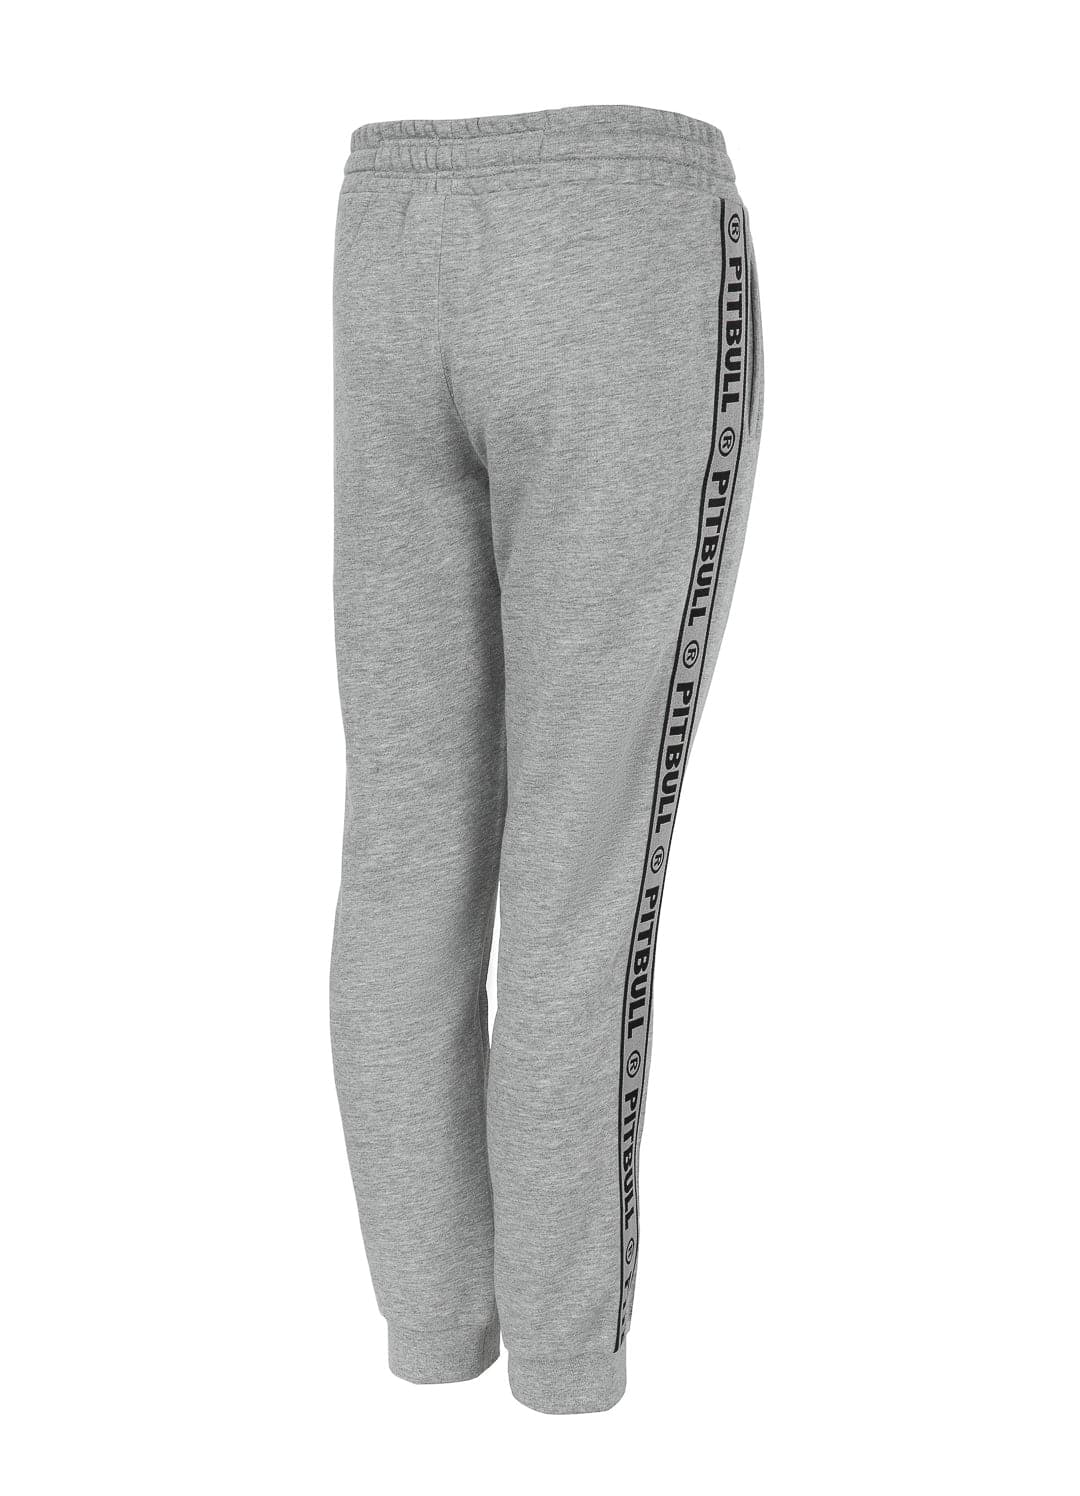 MERIDAN Kids Grey Jogging Pants - Pitbull West Coast International Store 